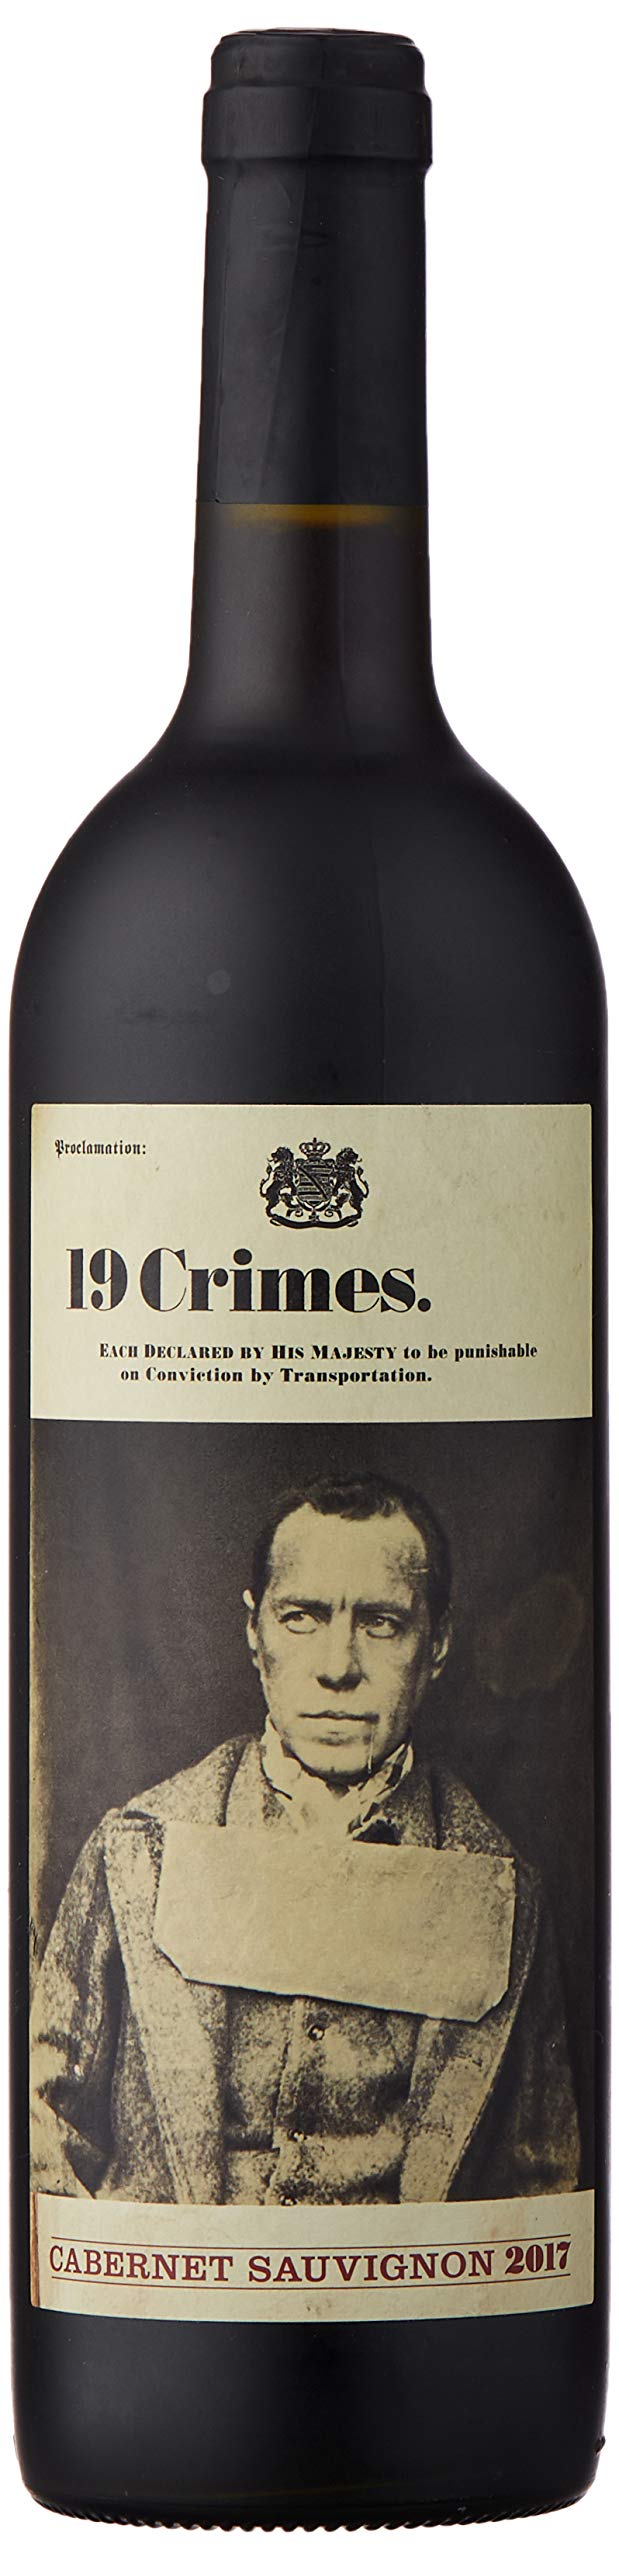 images/wine/Red Wine/19 Crimes Cabernet Sauvignon .jpg